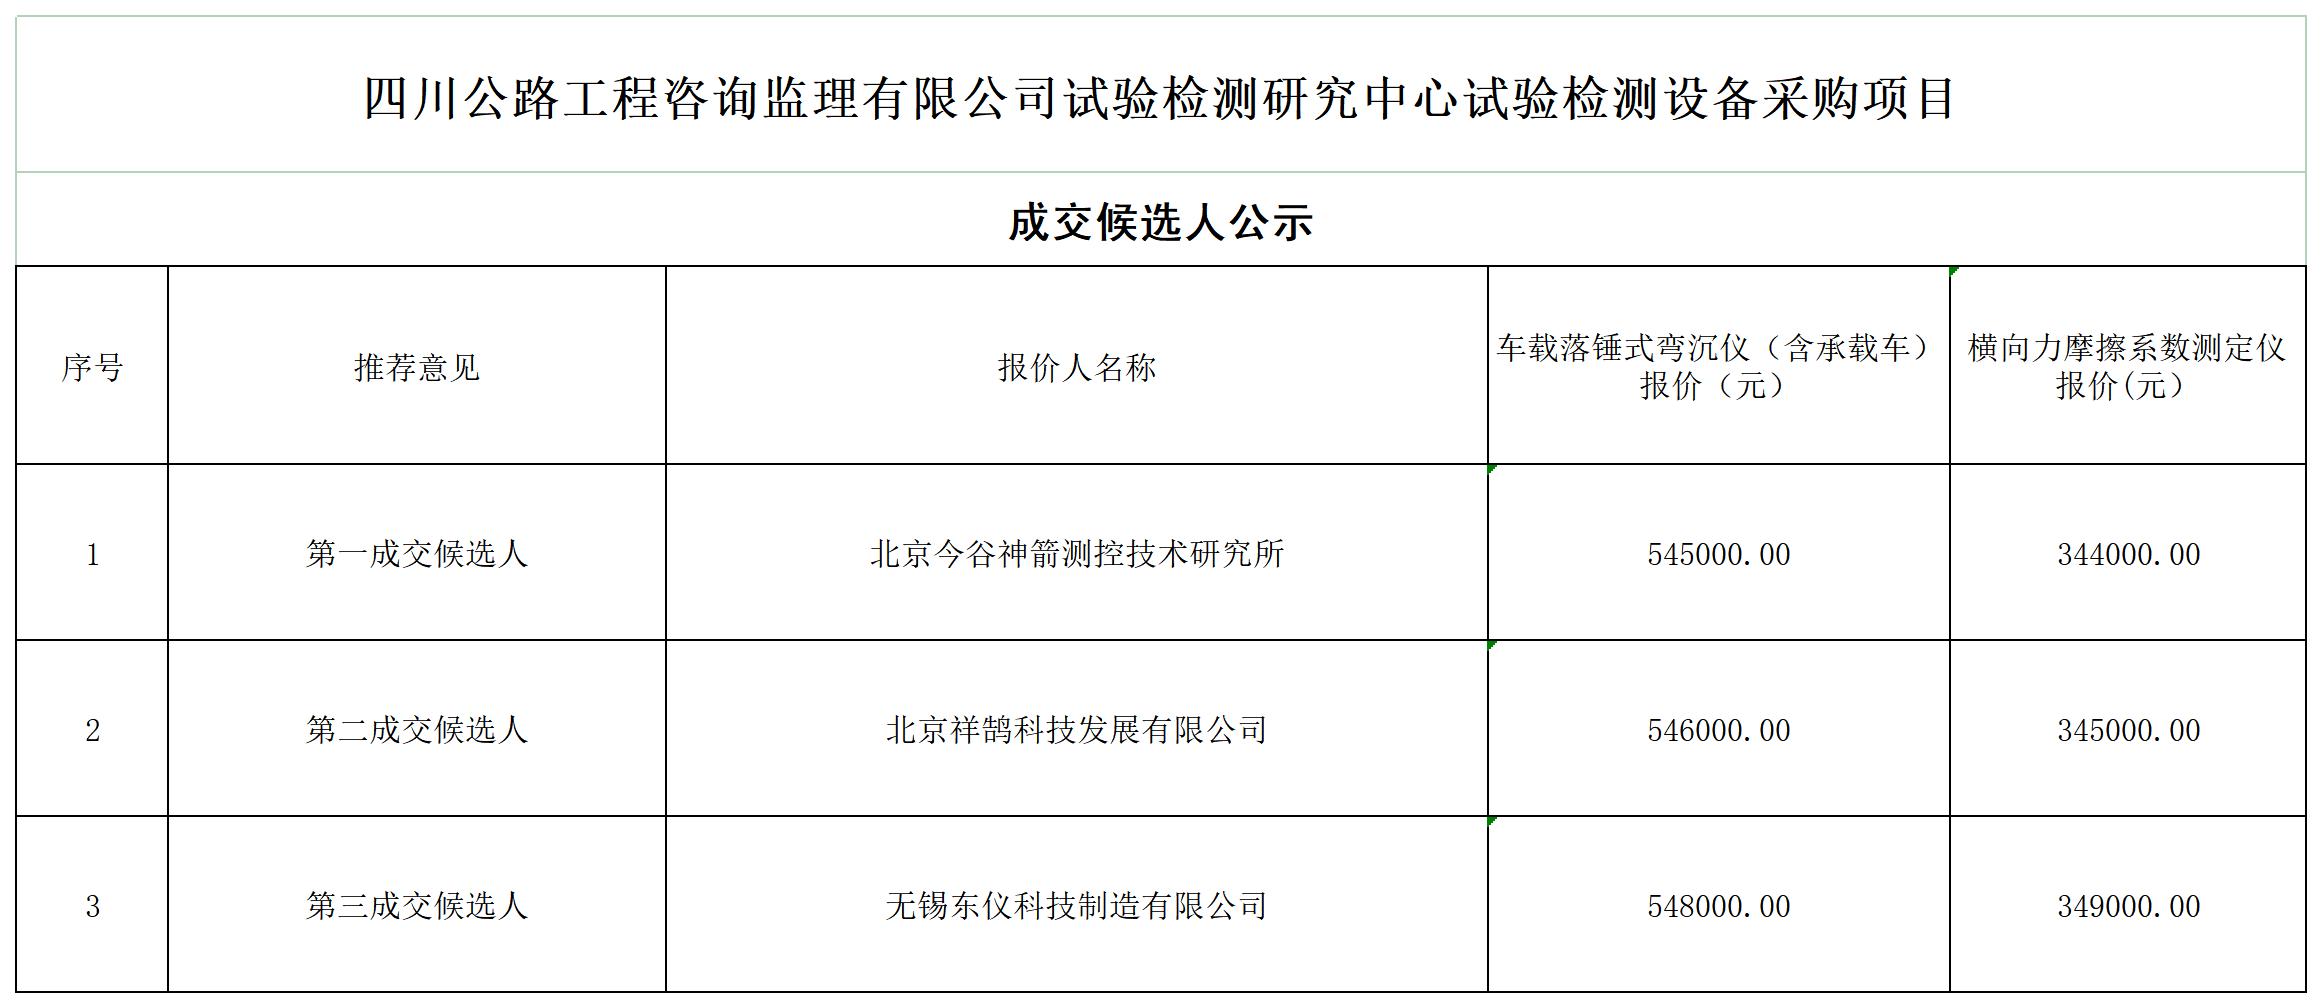 1HTH华体会·(中国)官方网站试验检测研究中心试验检测设备采购项目_A1G6.jpg